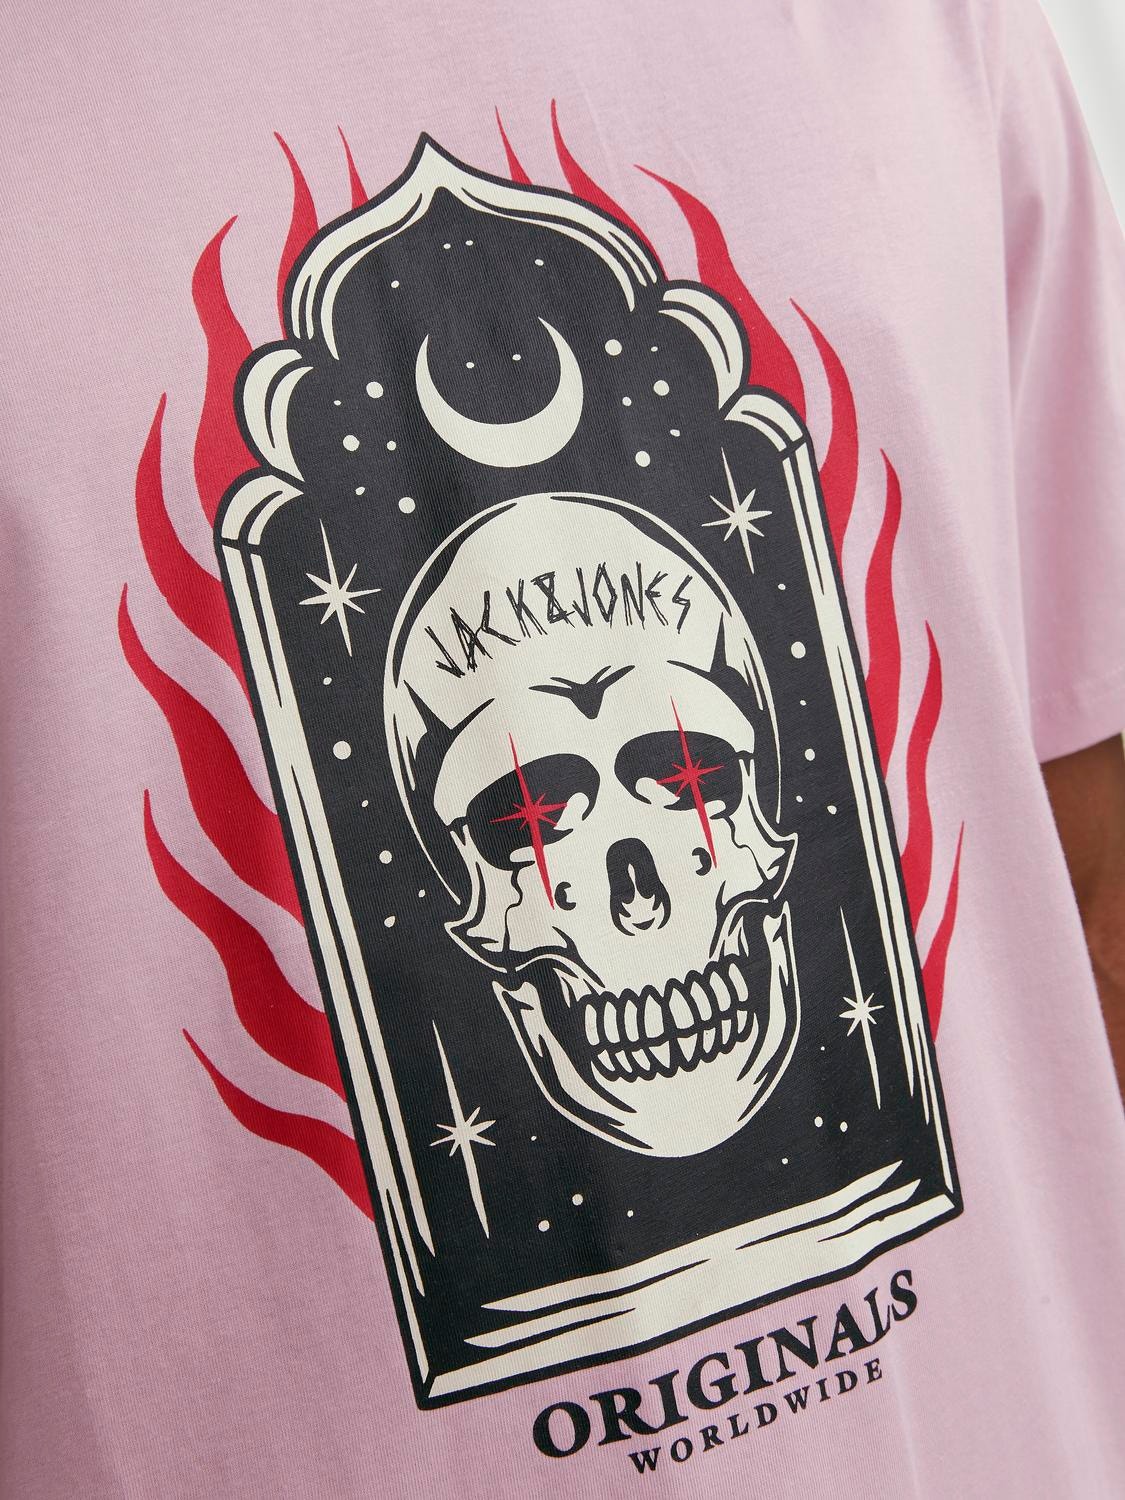 Jack & Jones Printed Crew neck T-shirt -Pink Nectar - 12249345